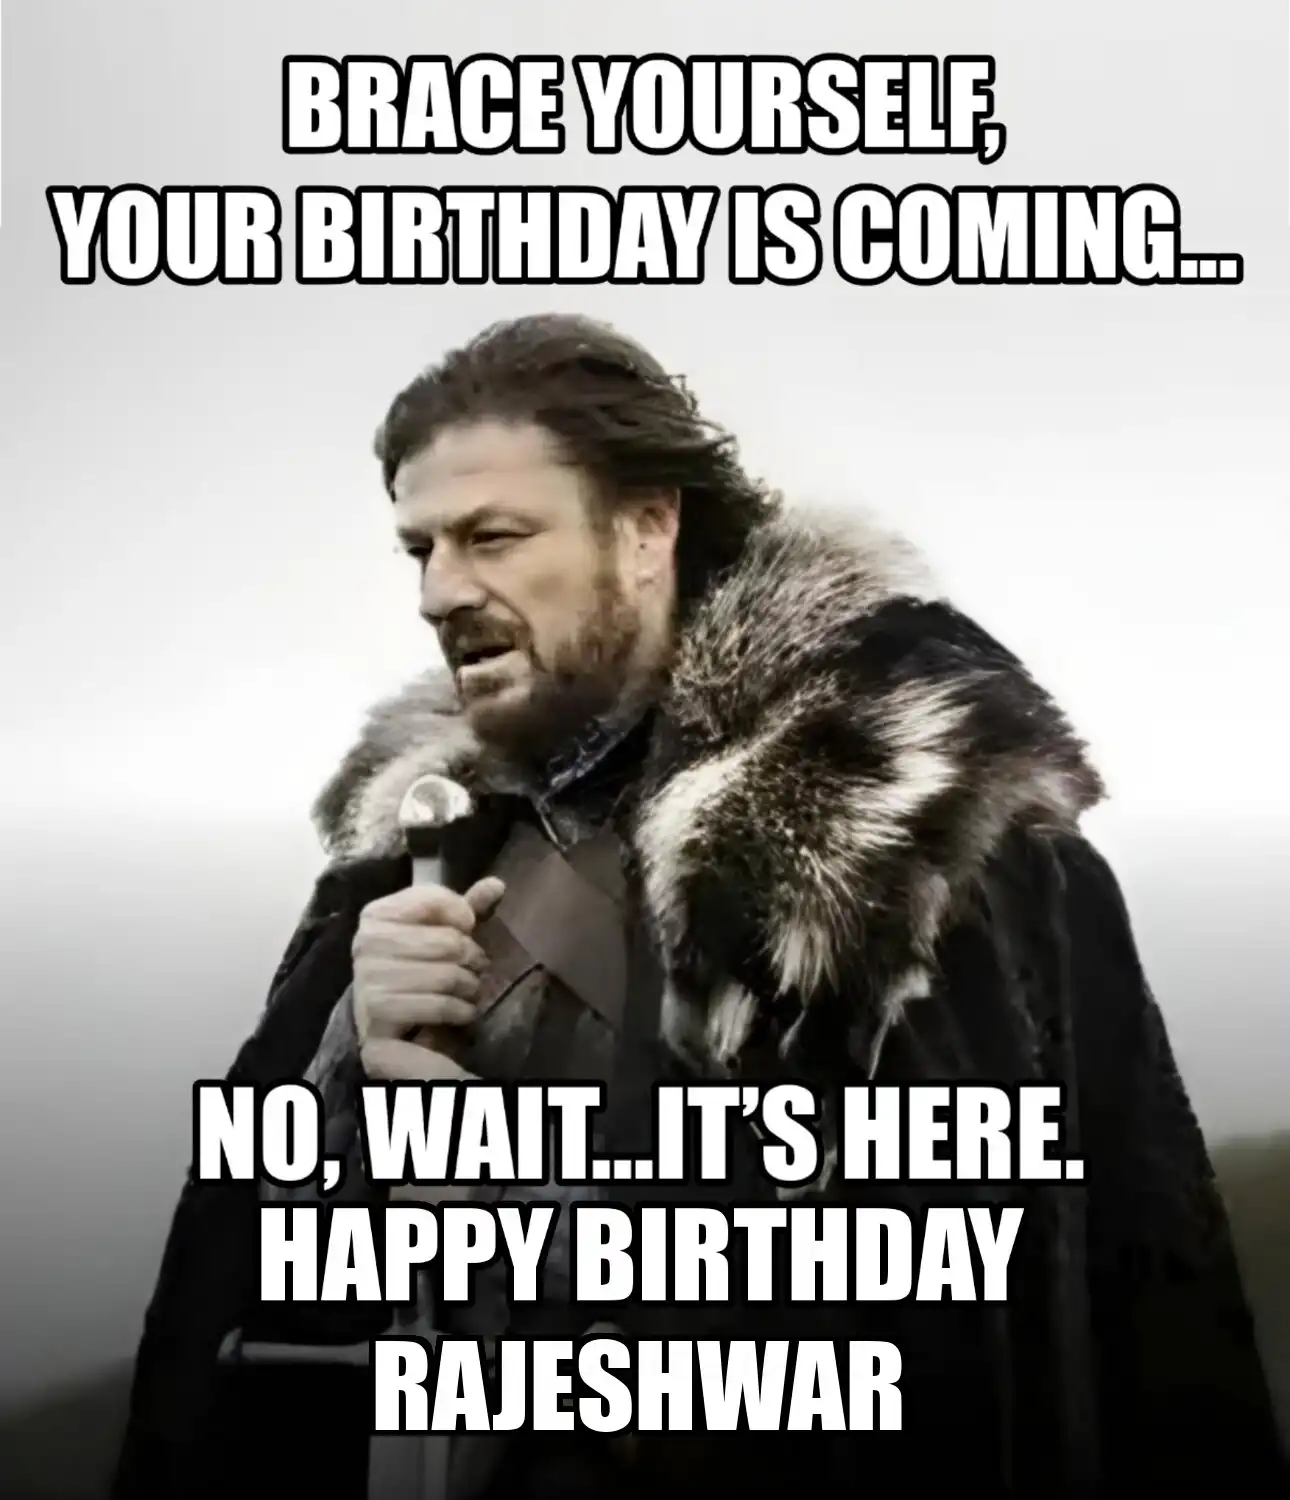 Happy Birthday Rajeshwar Brace Yourself Your Birthday Is Coming Meme